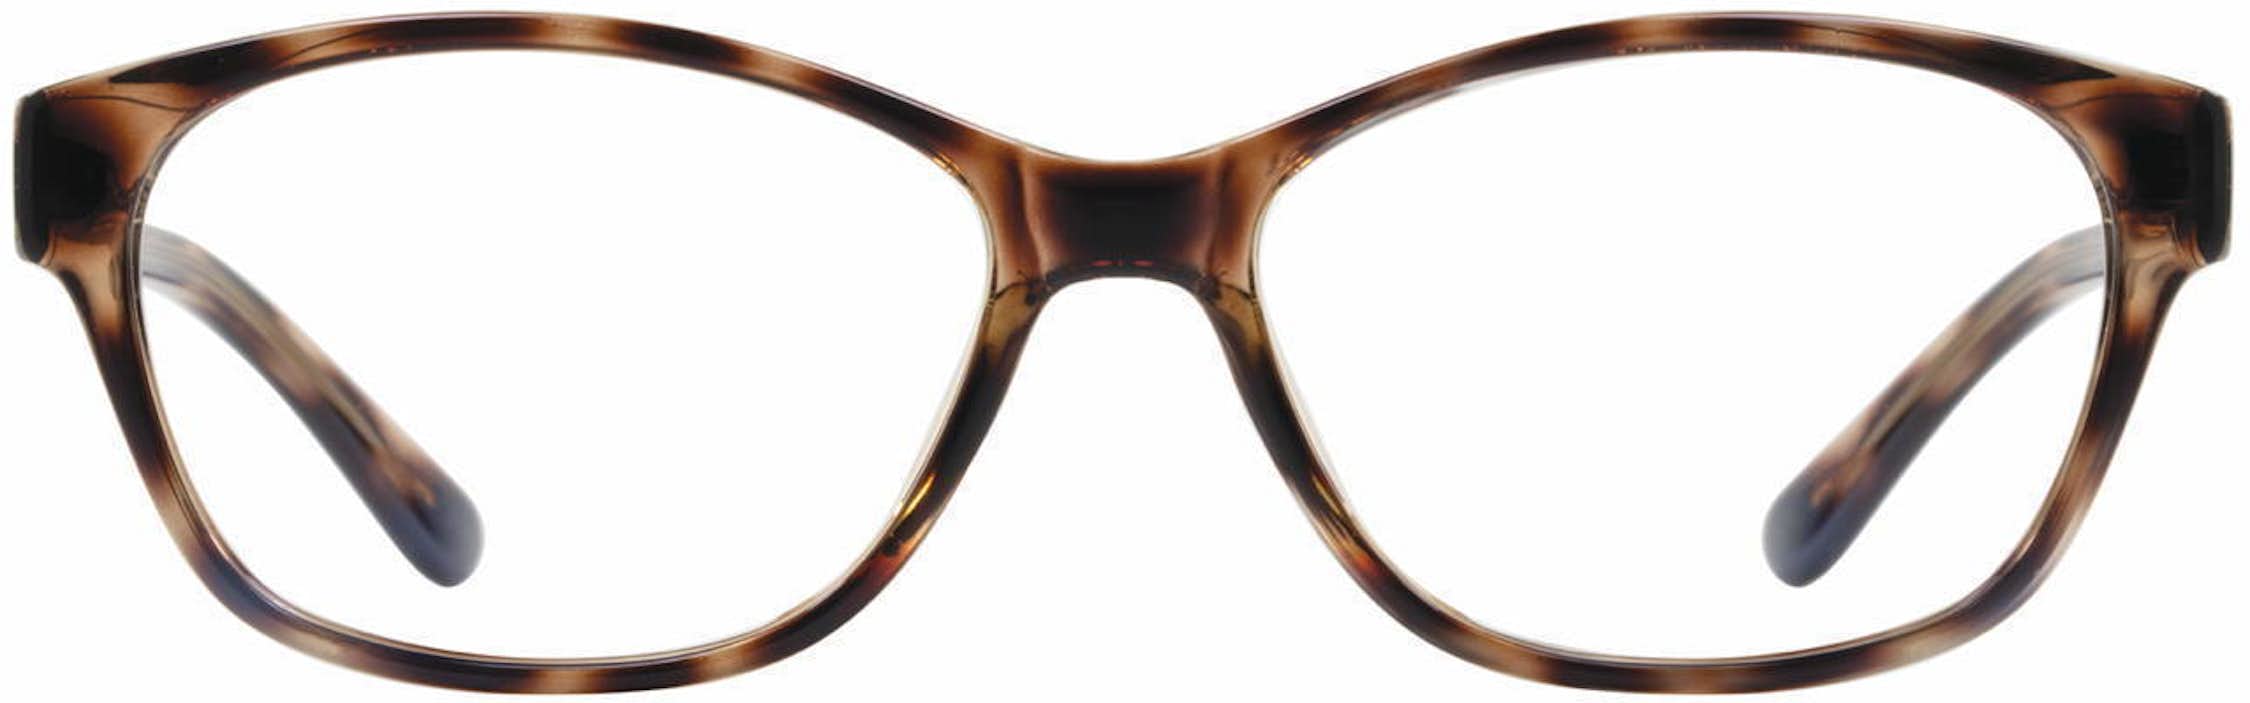 Shop Glasses Online Simon Eye